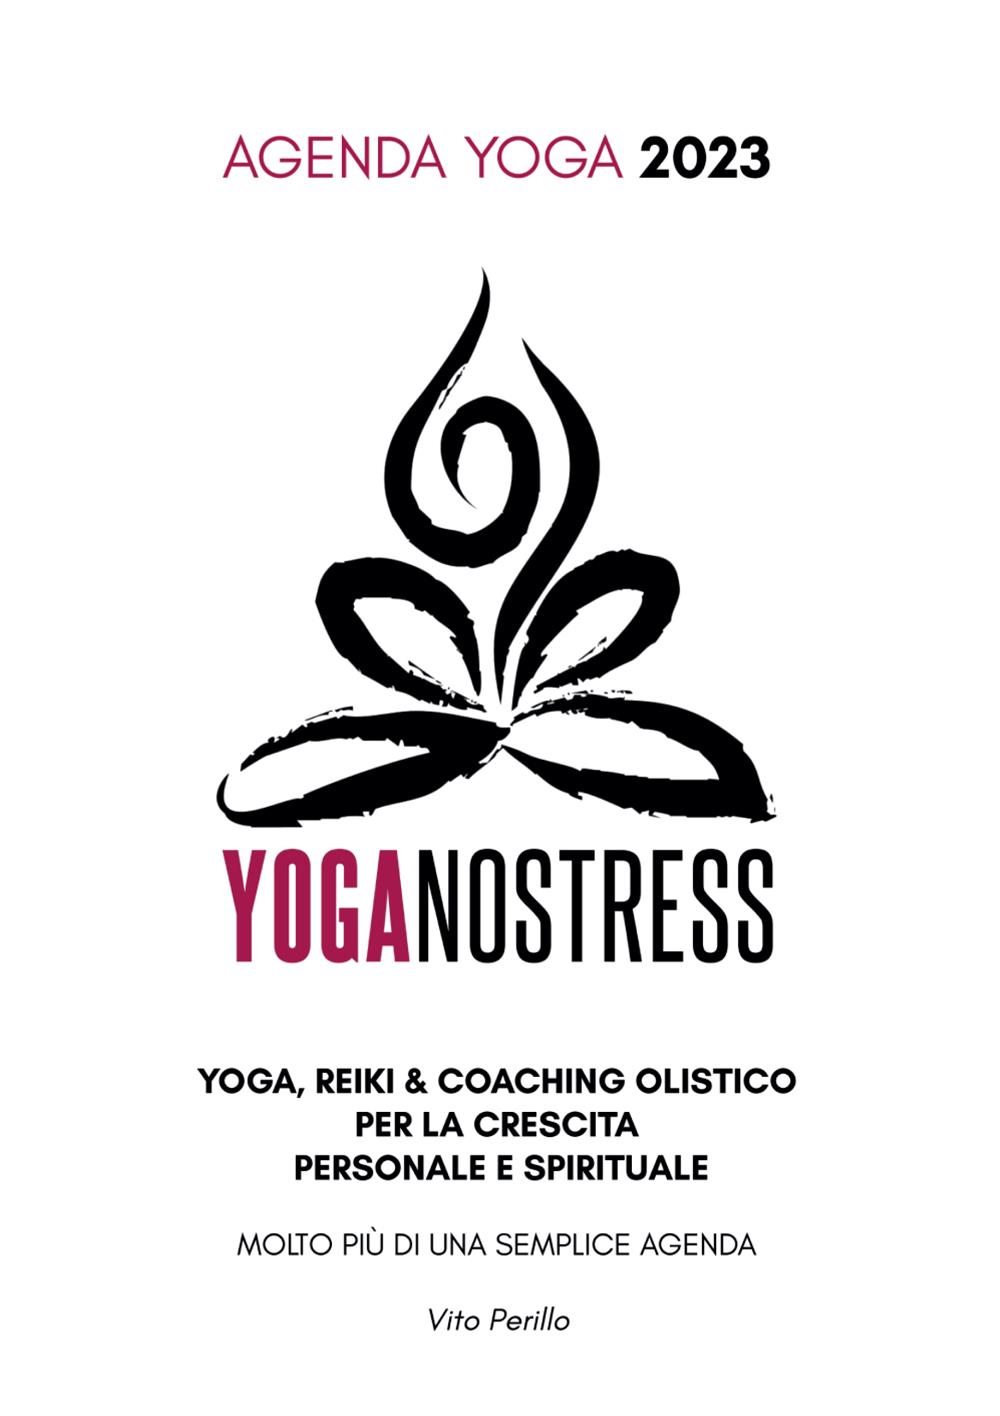 Agenda Yoga 2023 Yoganostress